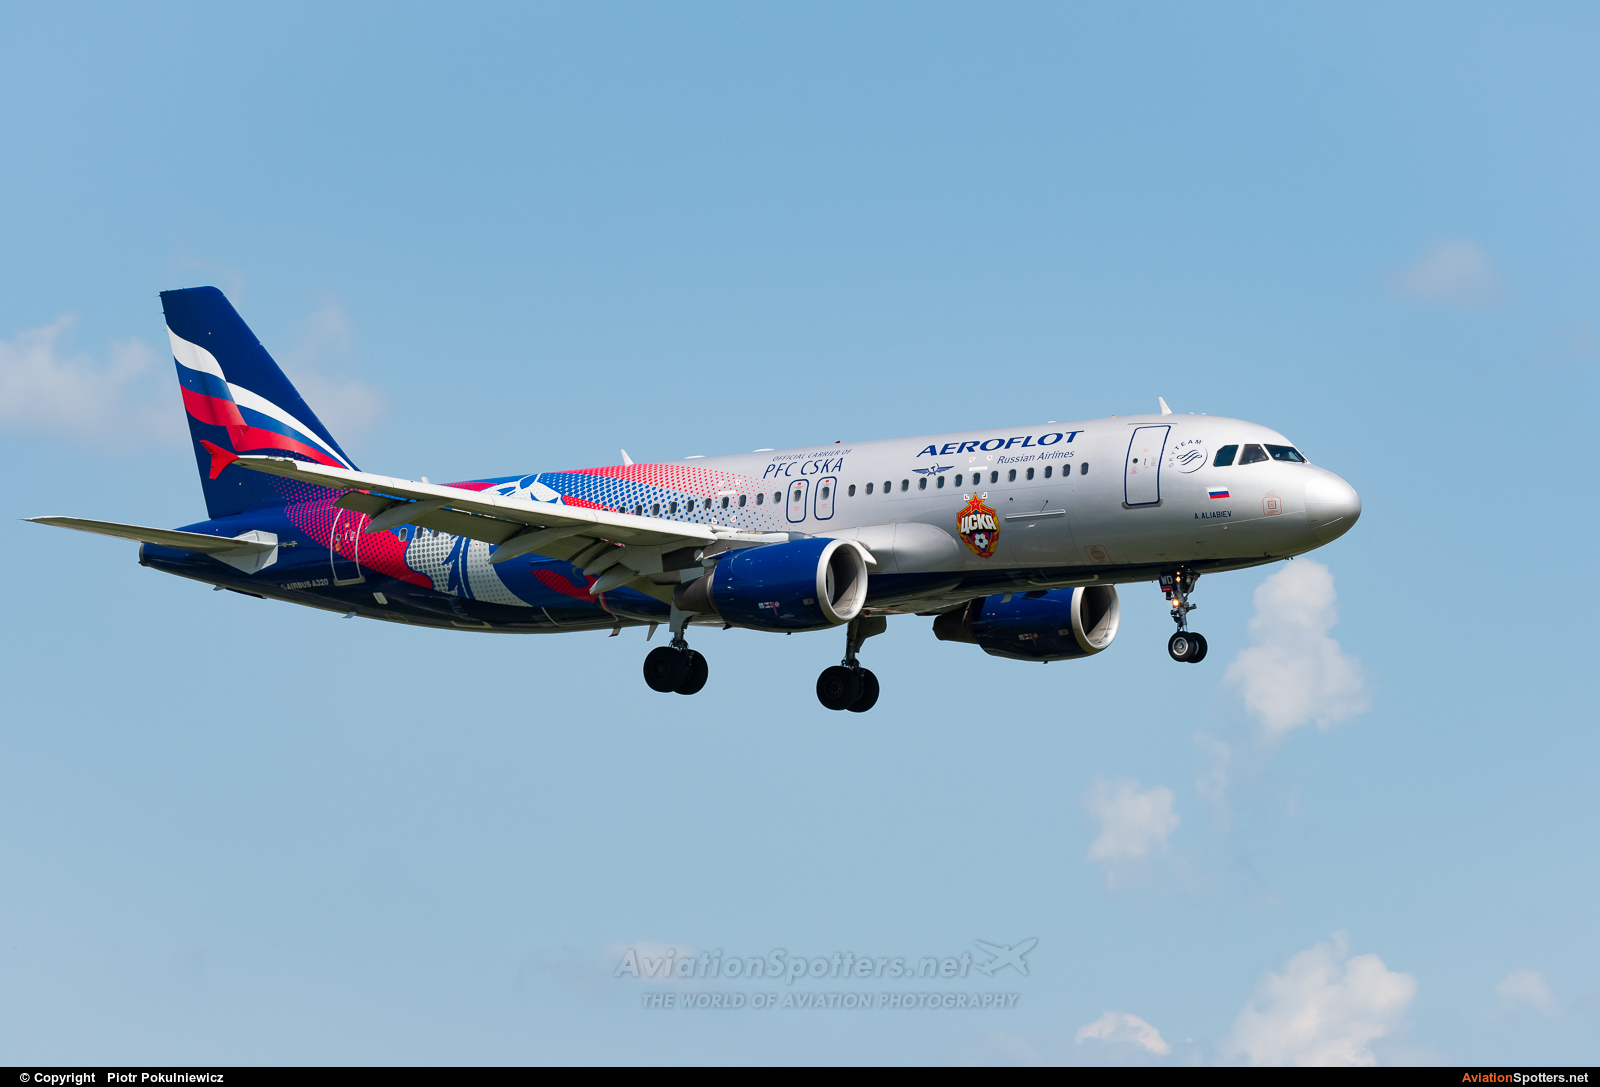 Aeroflot  -  A320-214  (VP-BWD) By Piotr Pokulniewicz (Piciu)